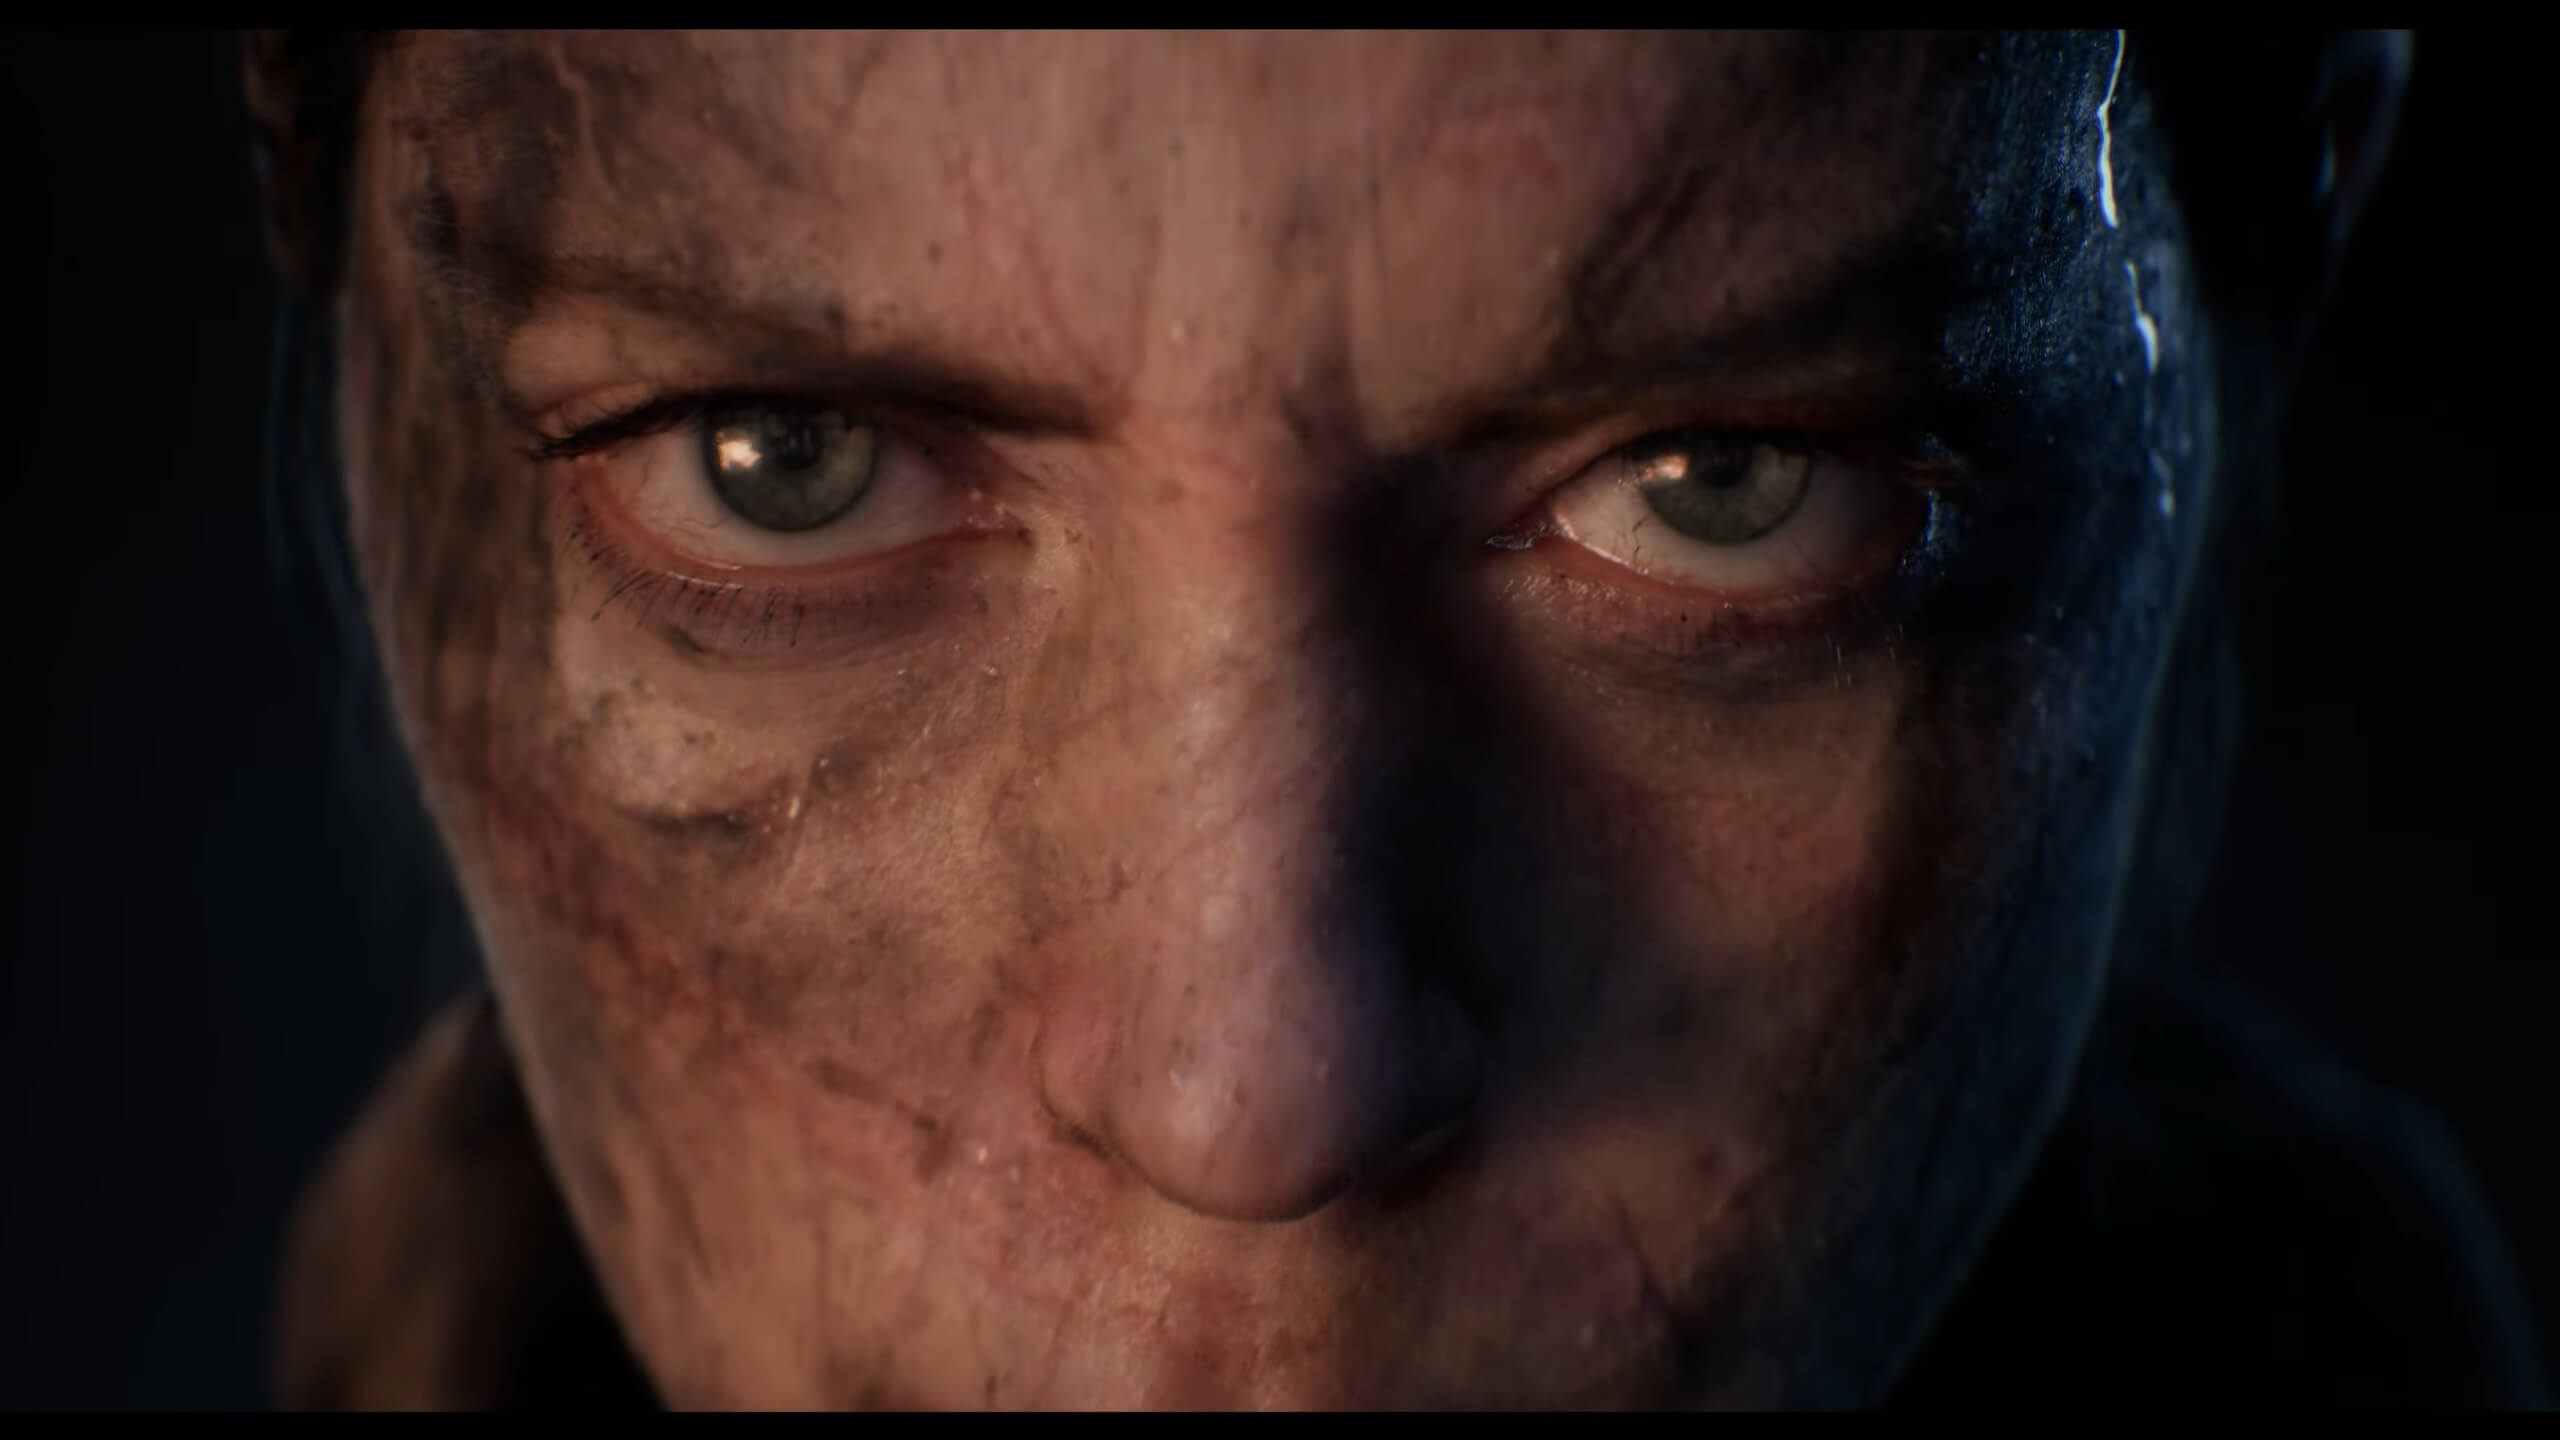 Senua's Saga: Hellblade 2 for Xbox & PC — Trailers, gameplay, and